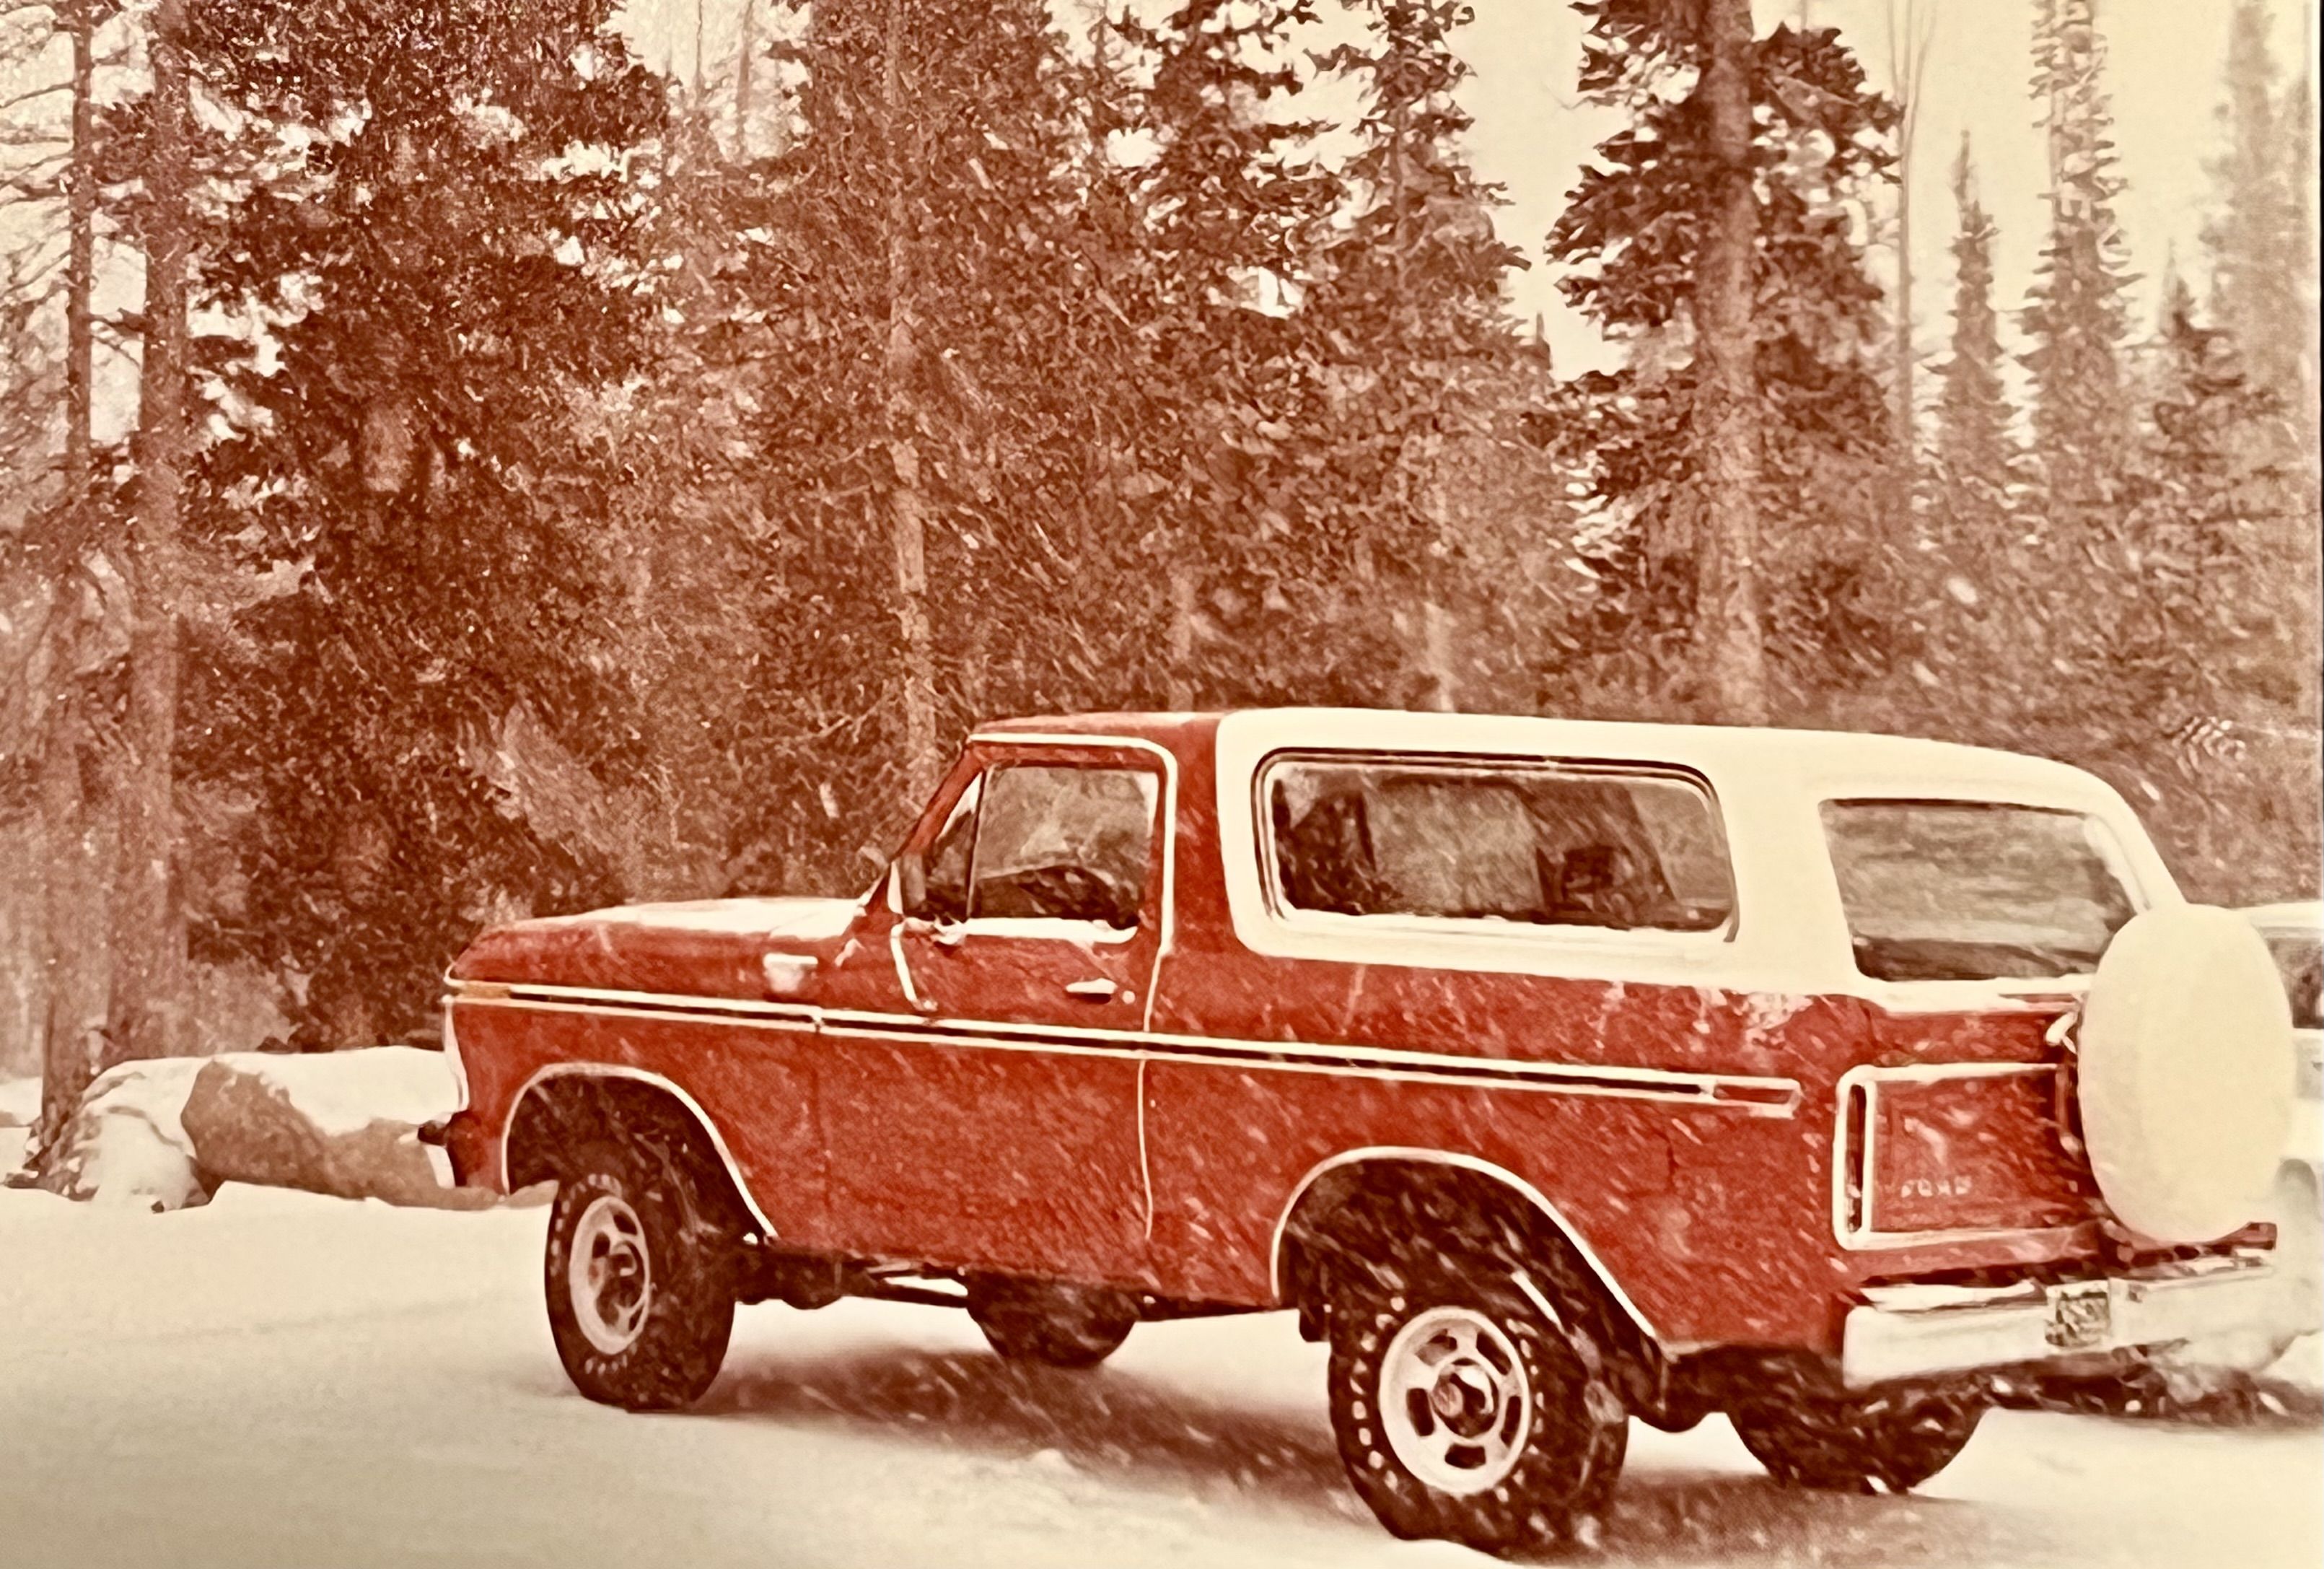 Bronco 2G '78 at Colorado Winter Trailhead.jpg